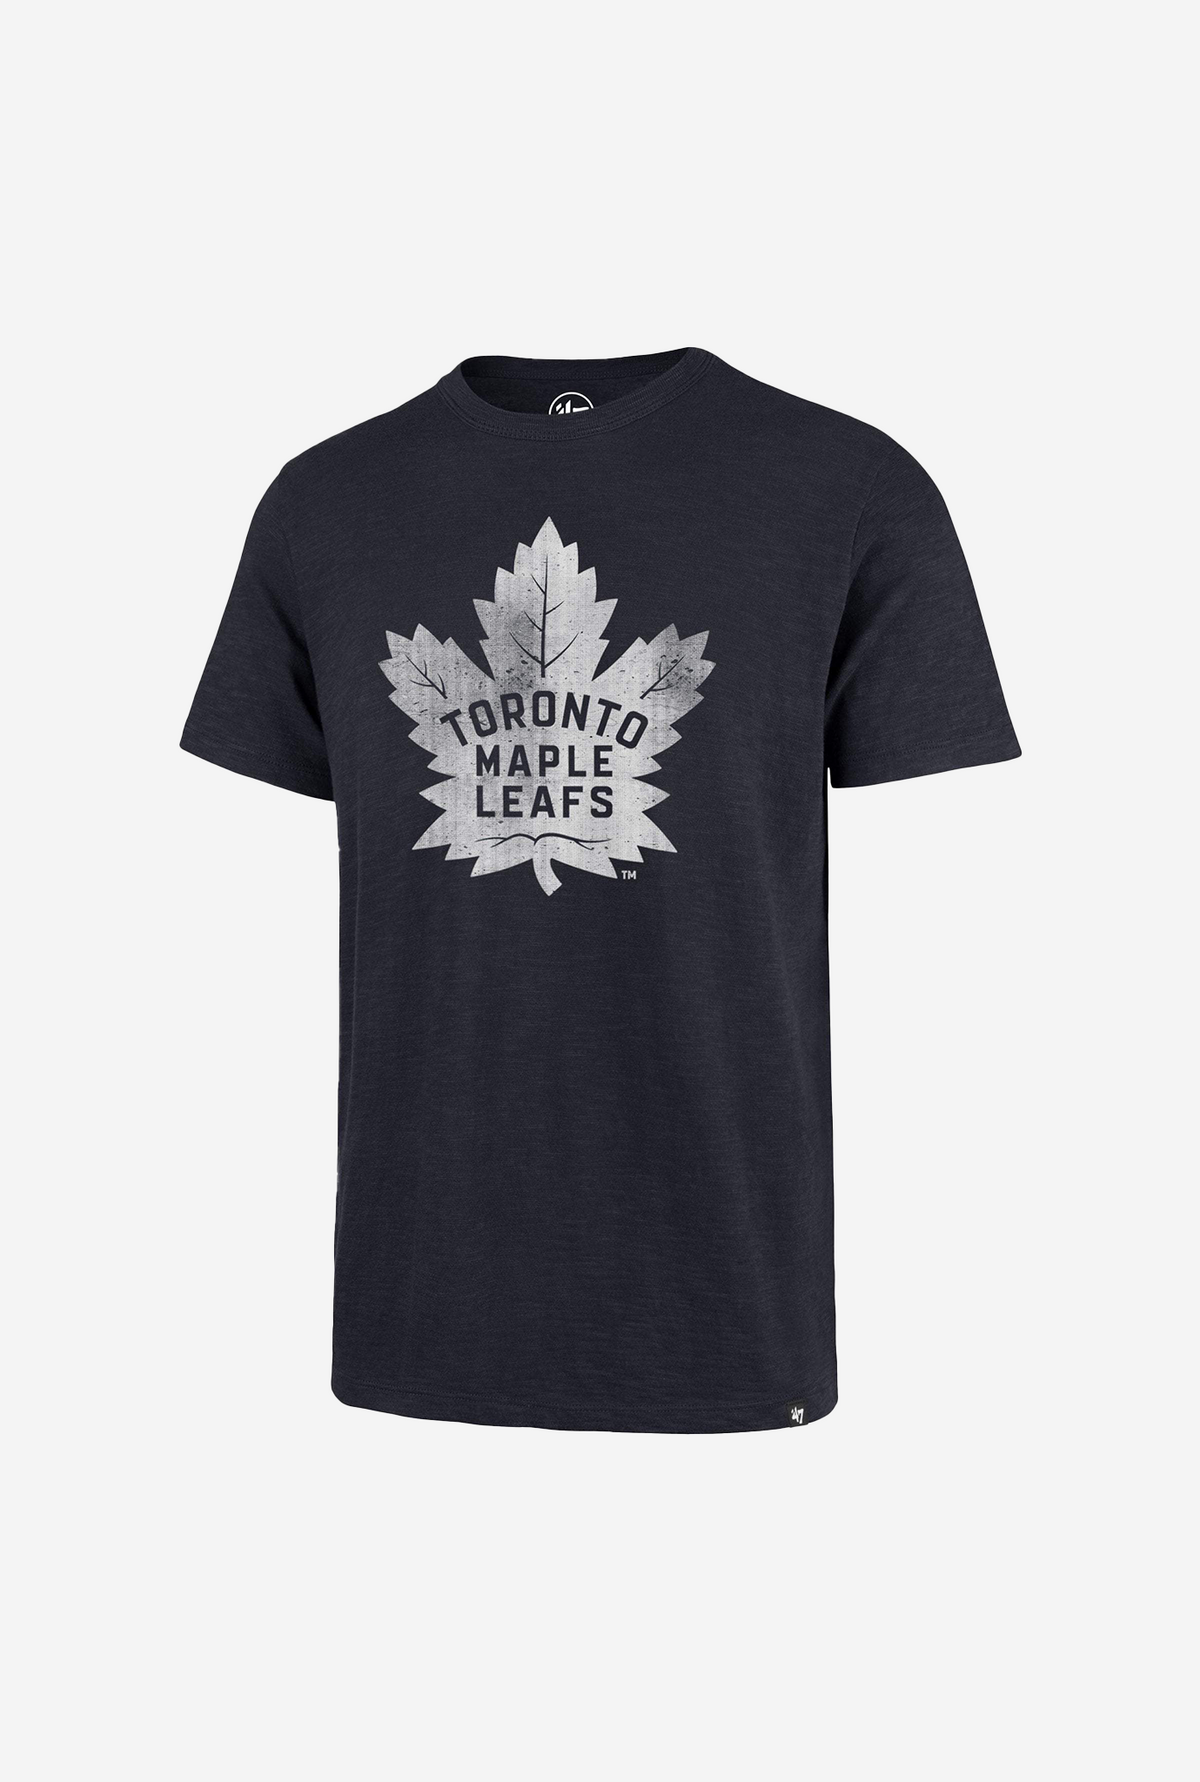 Toronto Maple Leafs Grit Scrum T-Shirt